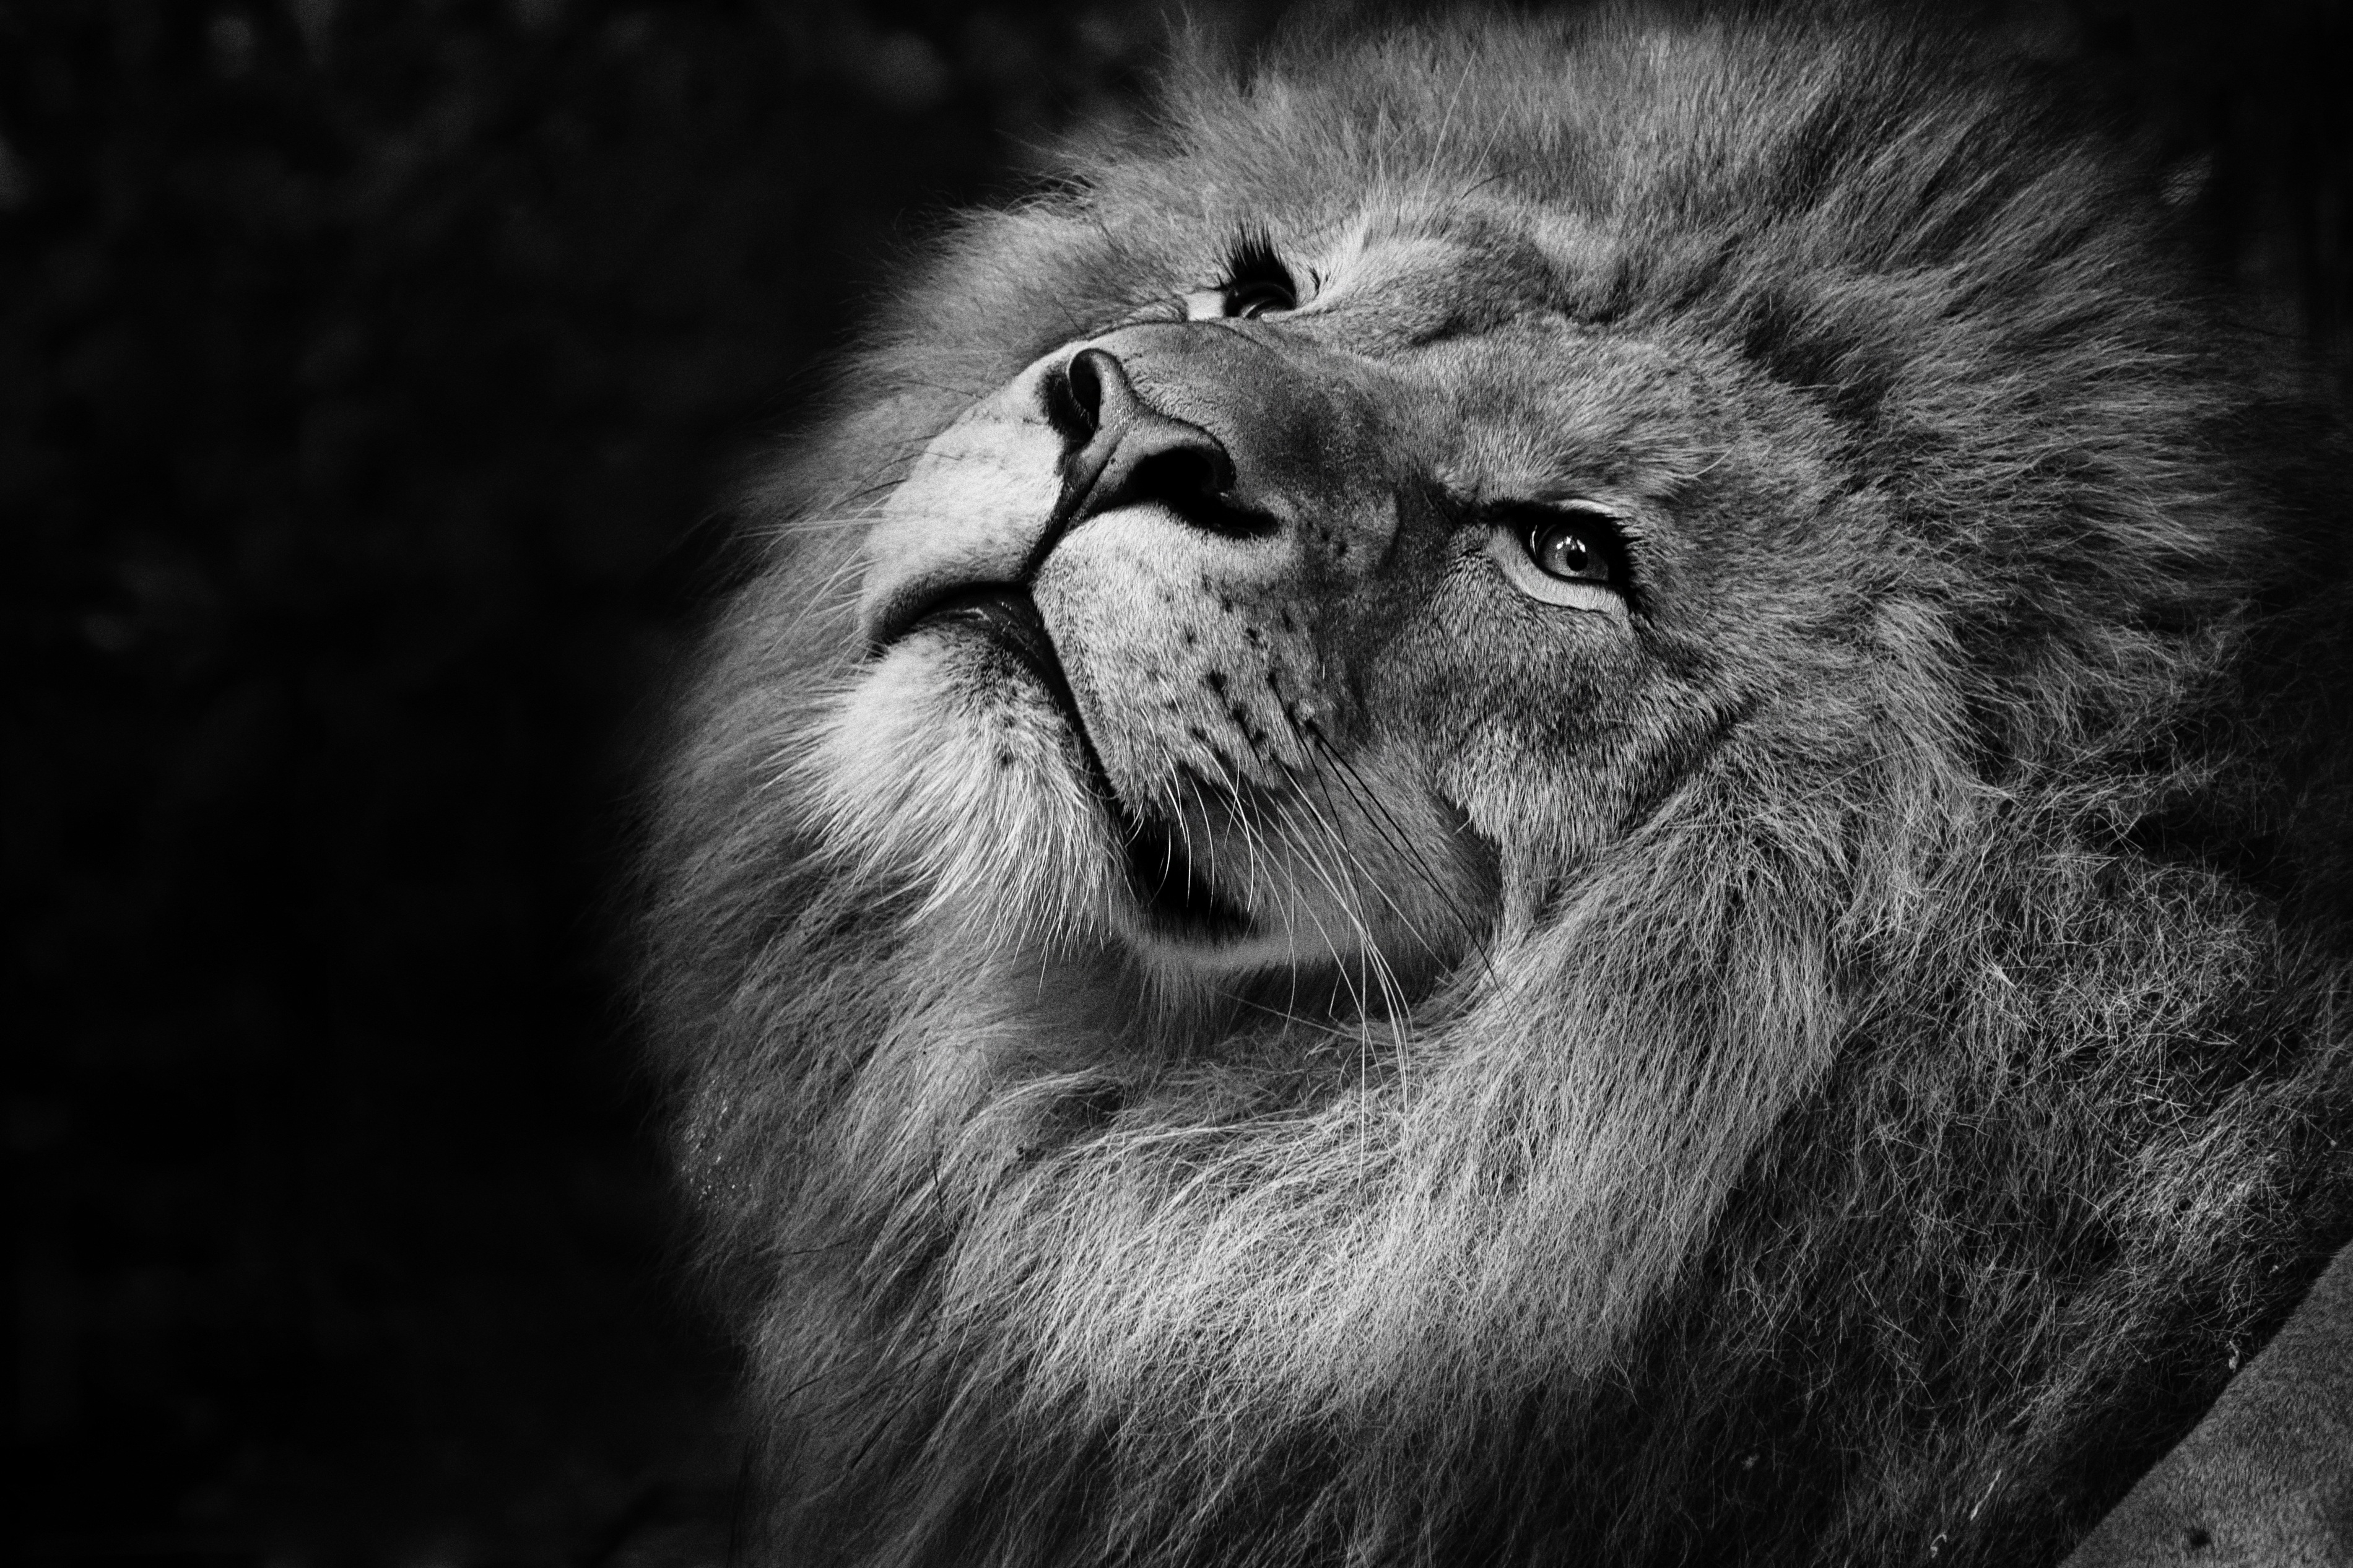 HD wallpaper, Predator, Carnivore, Black Background, Feline, African Lion, Closeup, Wild Animal, Portrait, Grayscale